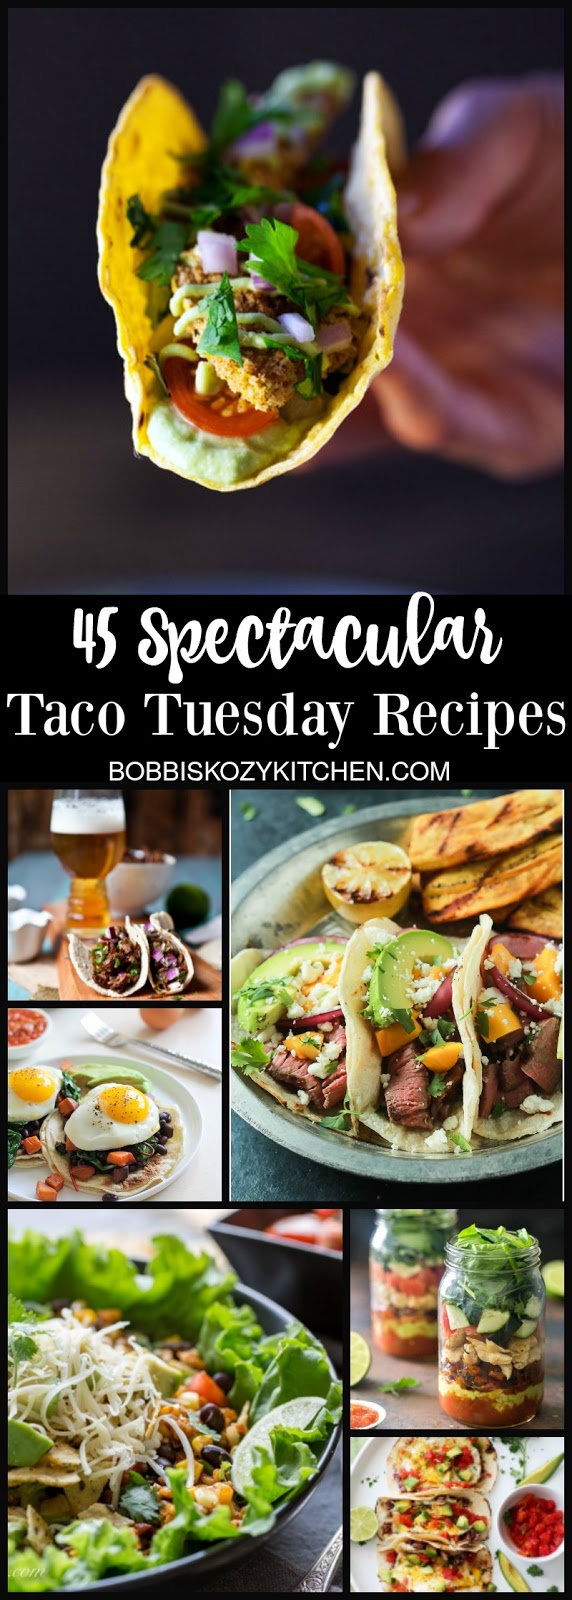 45 Spectacular Taco Tuesday Recipes from www.bobbiskozykitchen.com